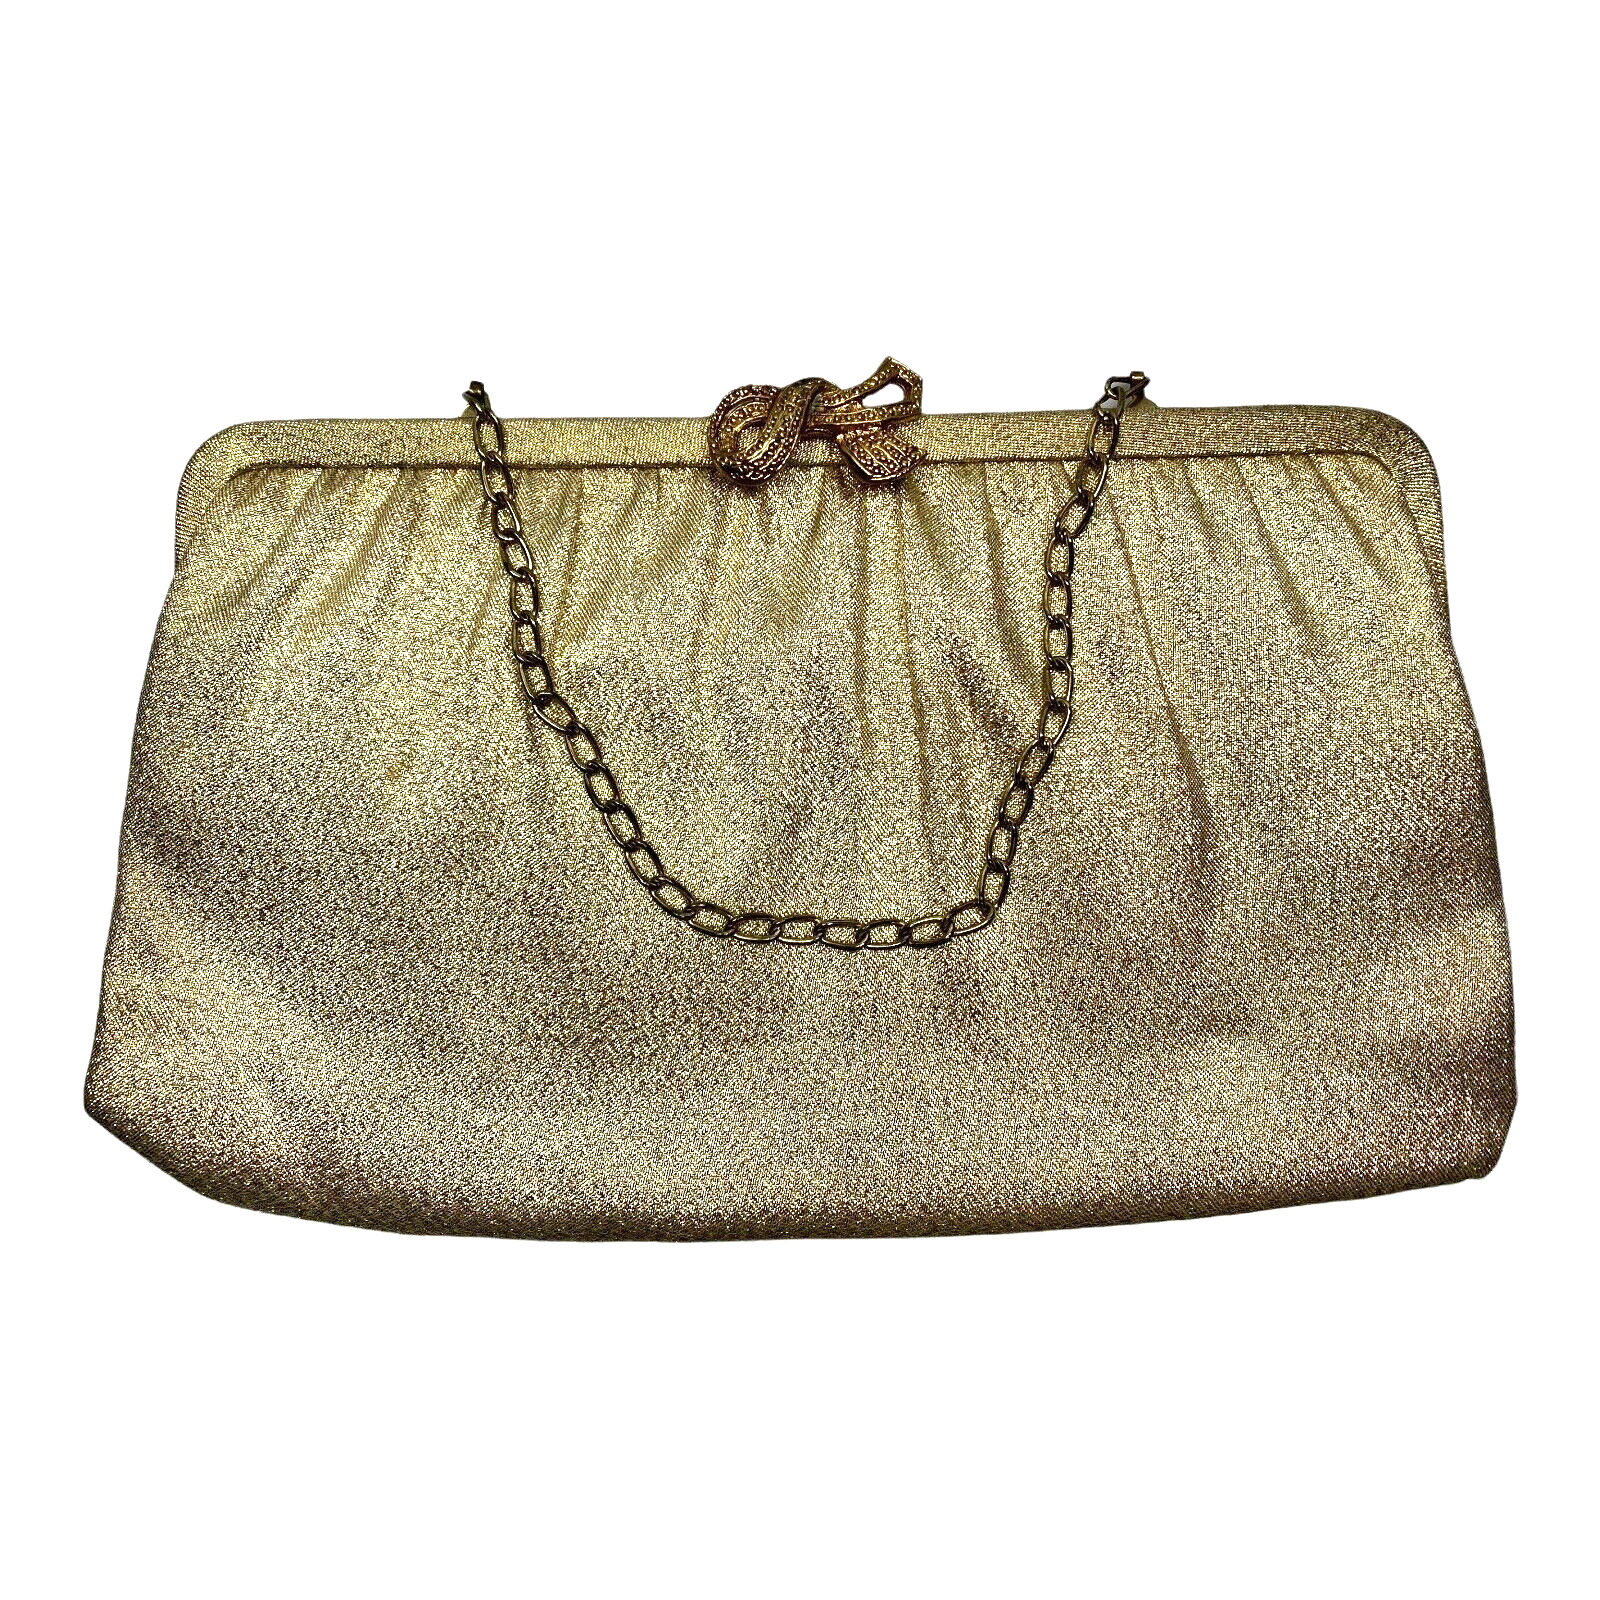 Vintage 50s 60s Gold Lame Metallic Clutch Purse Bag Handbag Hidden Chain Clasp